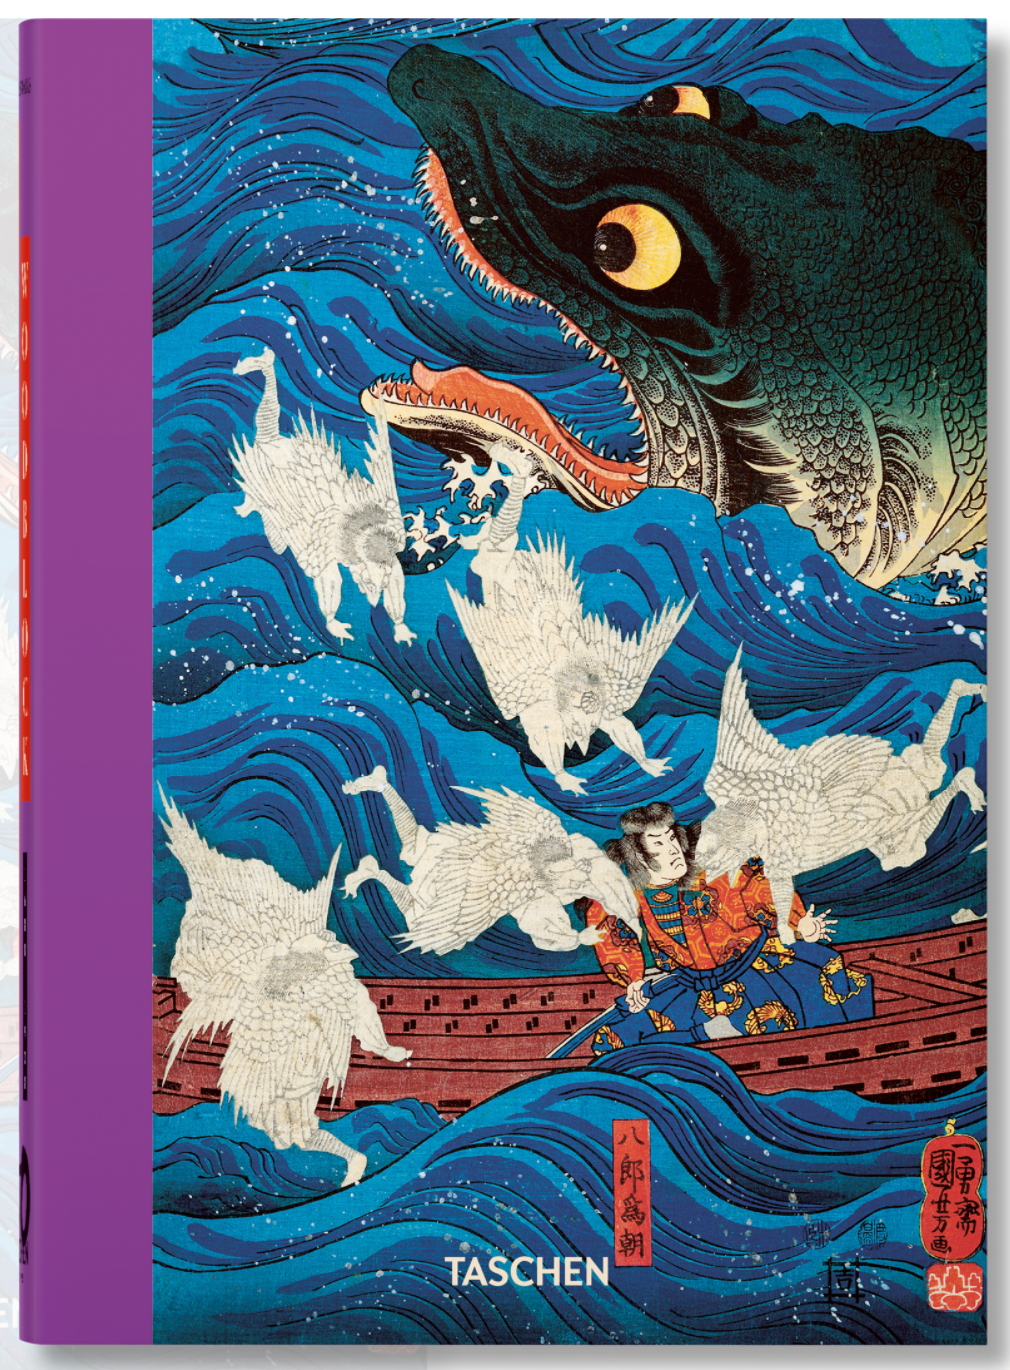 TASCHEN BOOKS -Japanese Woodblock Prints. 40th Anniversary Edition